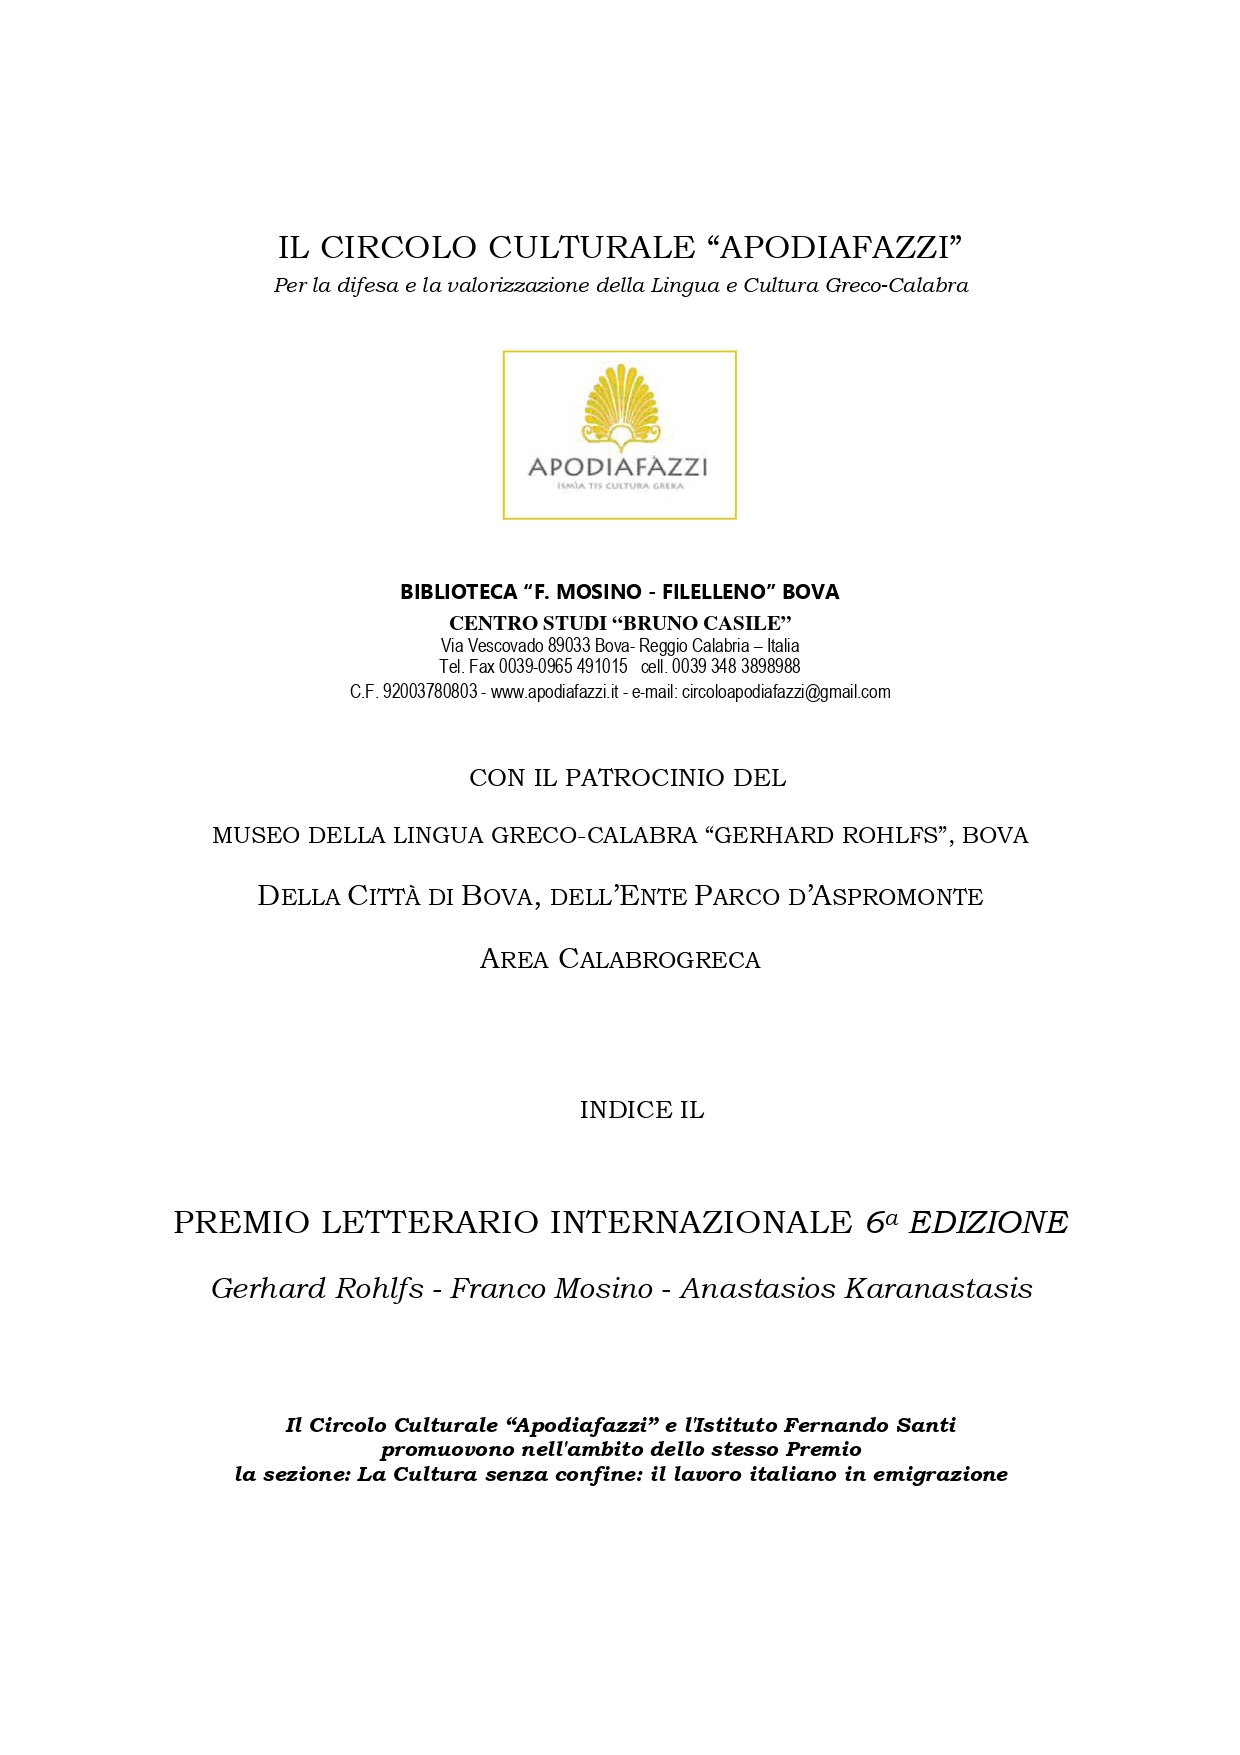 Premio Letterario Internazionale Gerhard Rohlfs - Franco Mosino - Anastasios Karanastasis